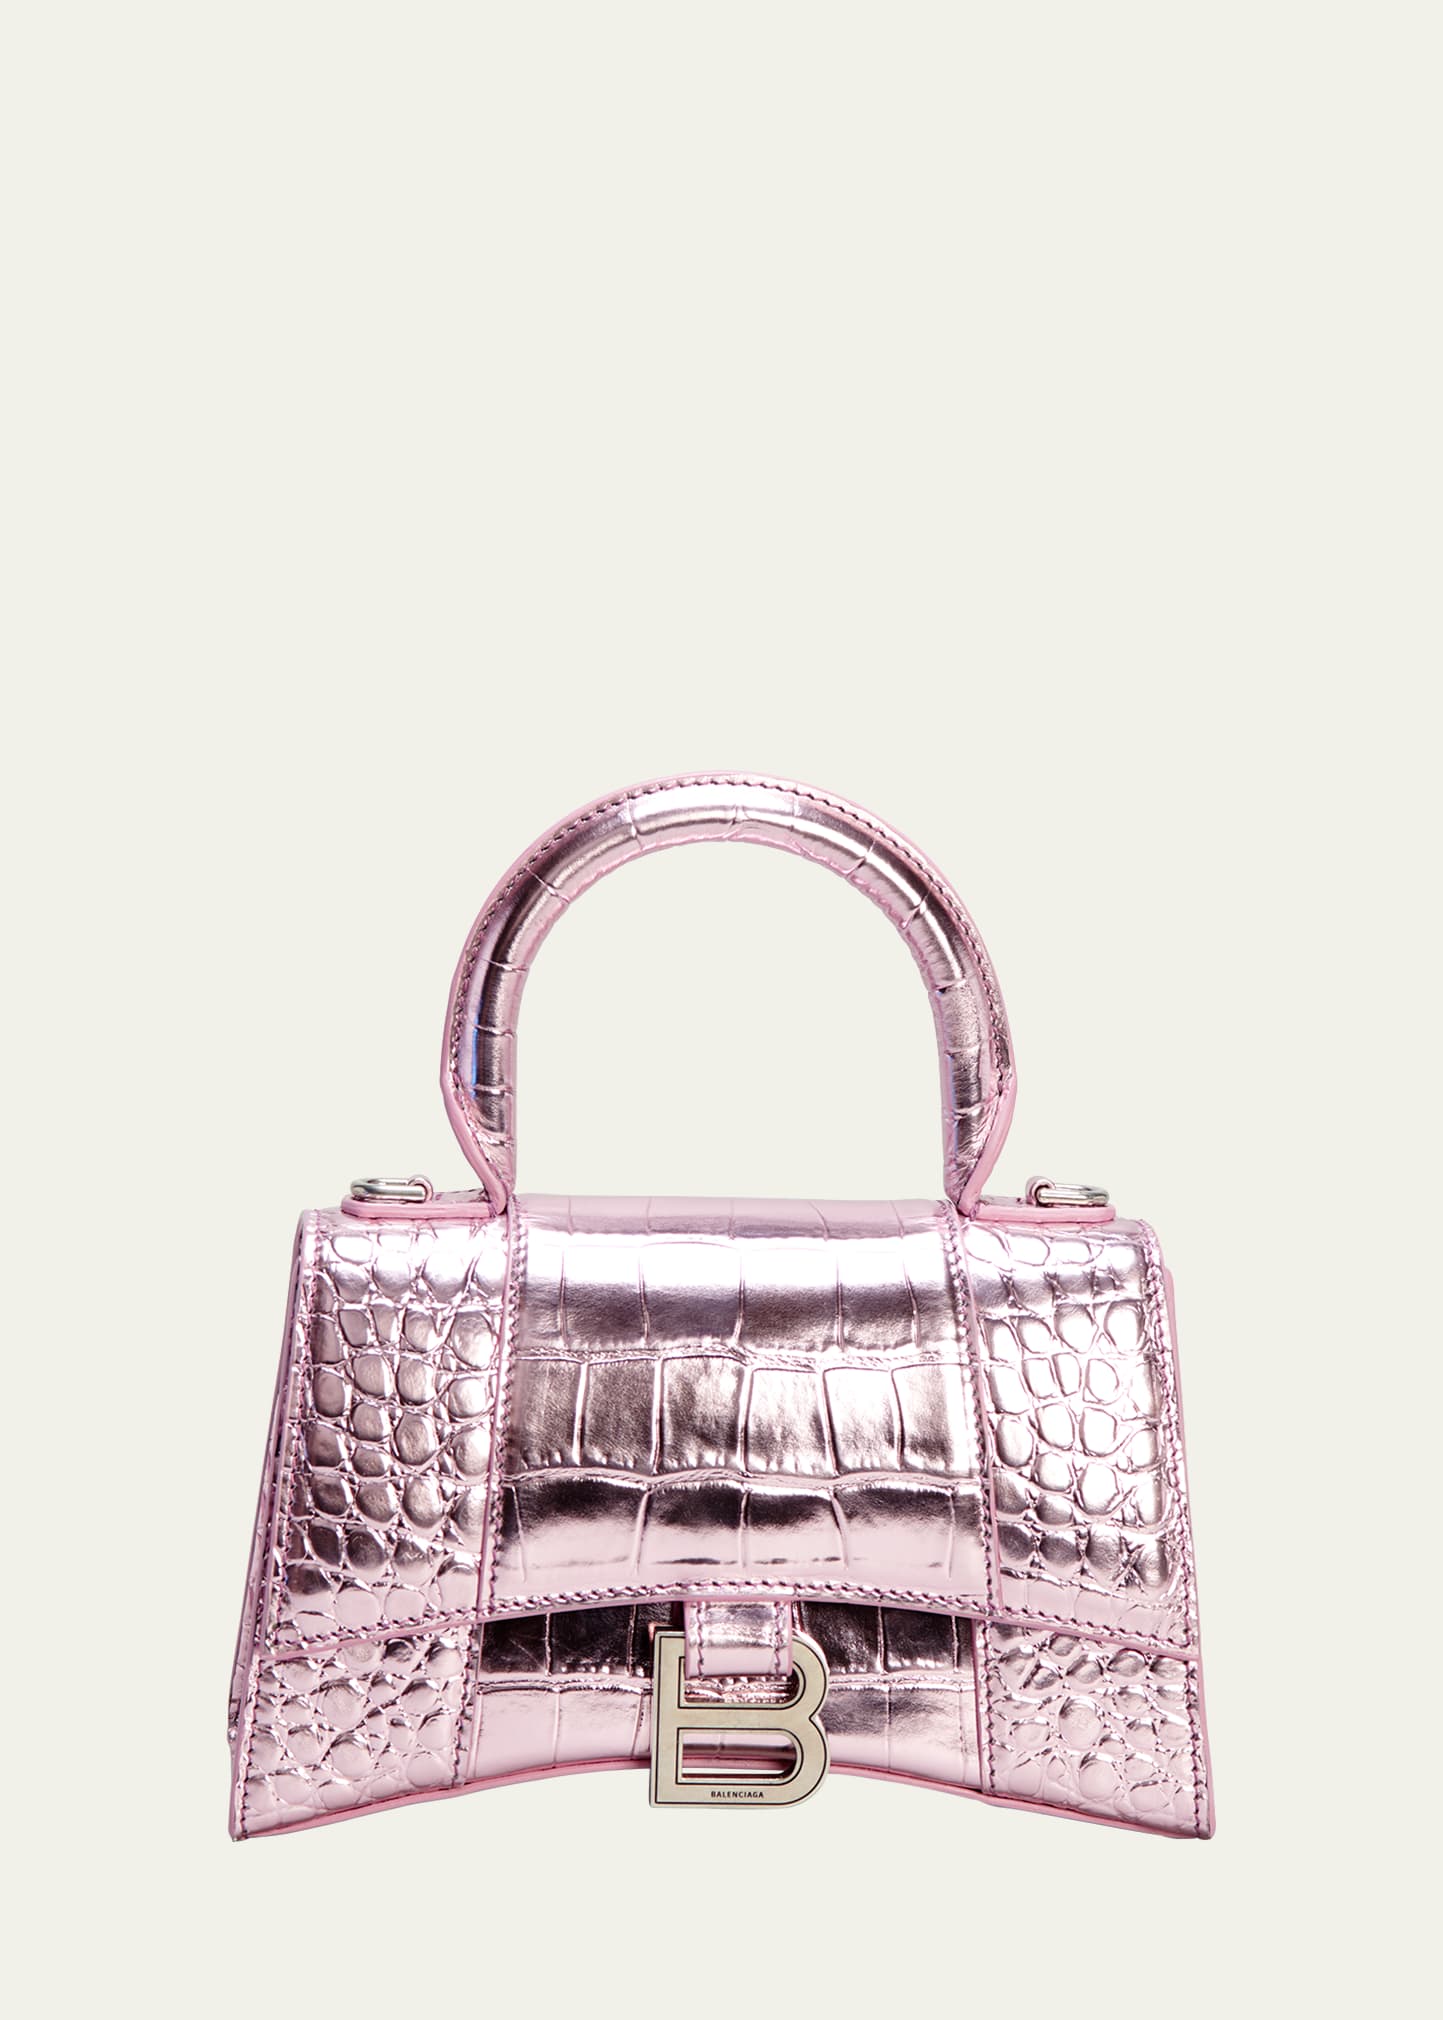 Hourglass Xs Bag - Balenciaga - Soft Pink - Leather